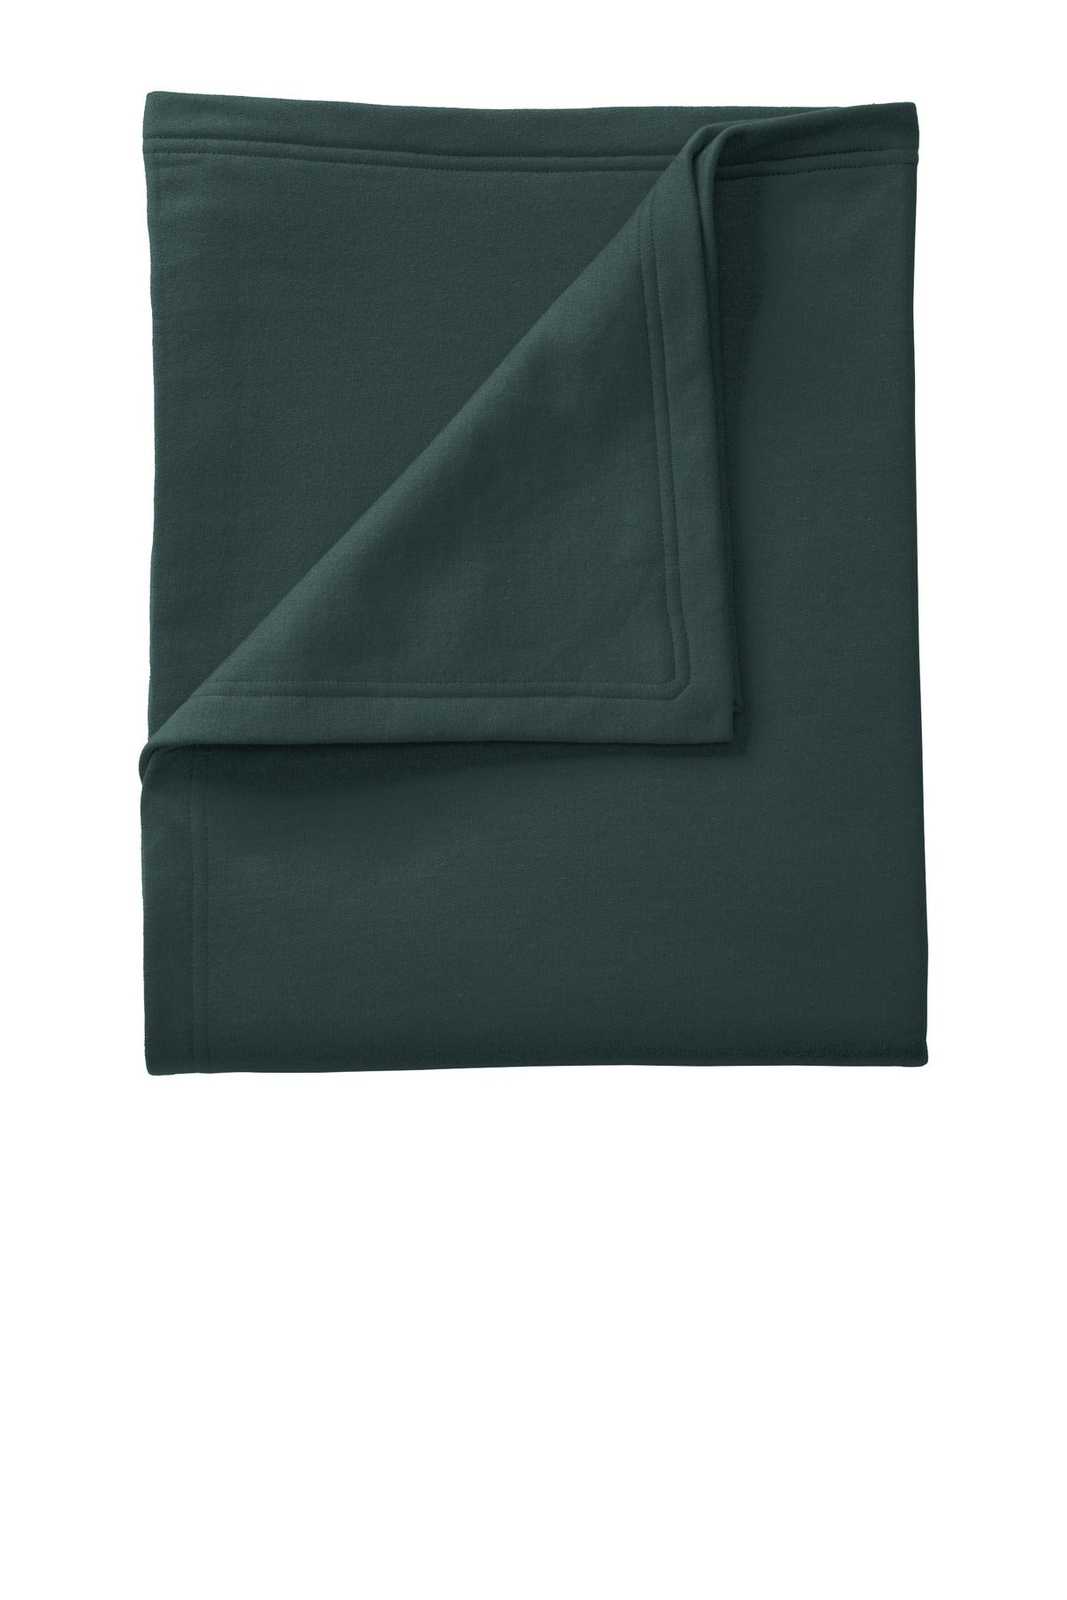 Port & Company BP78 Core Fleece Sweatshirt Blanket - Dark Green - HIT a Double - 1